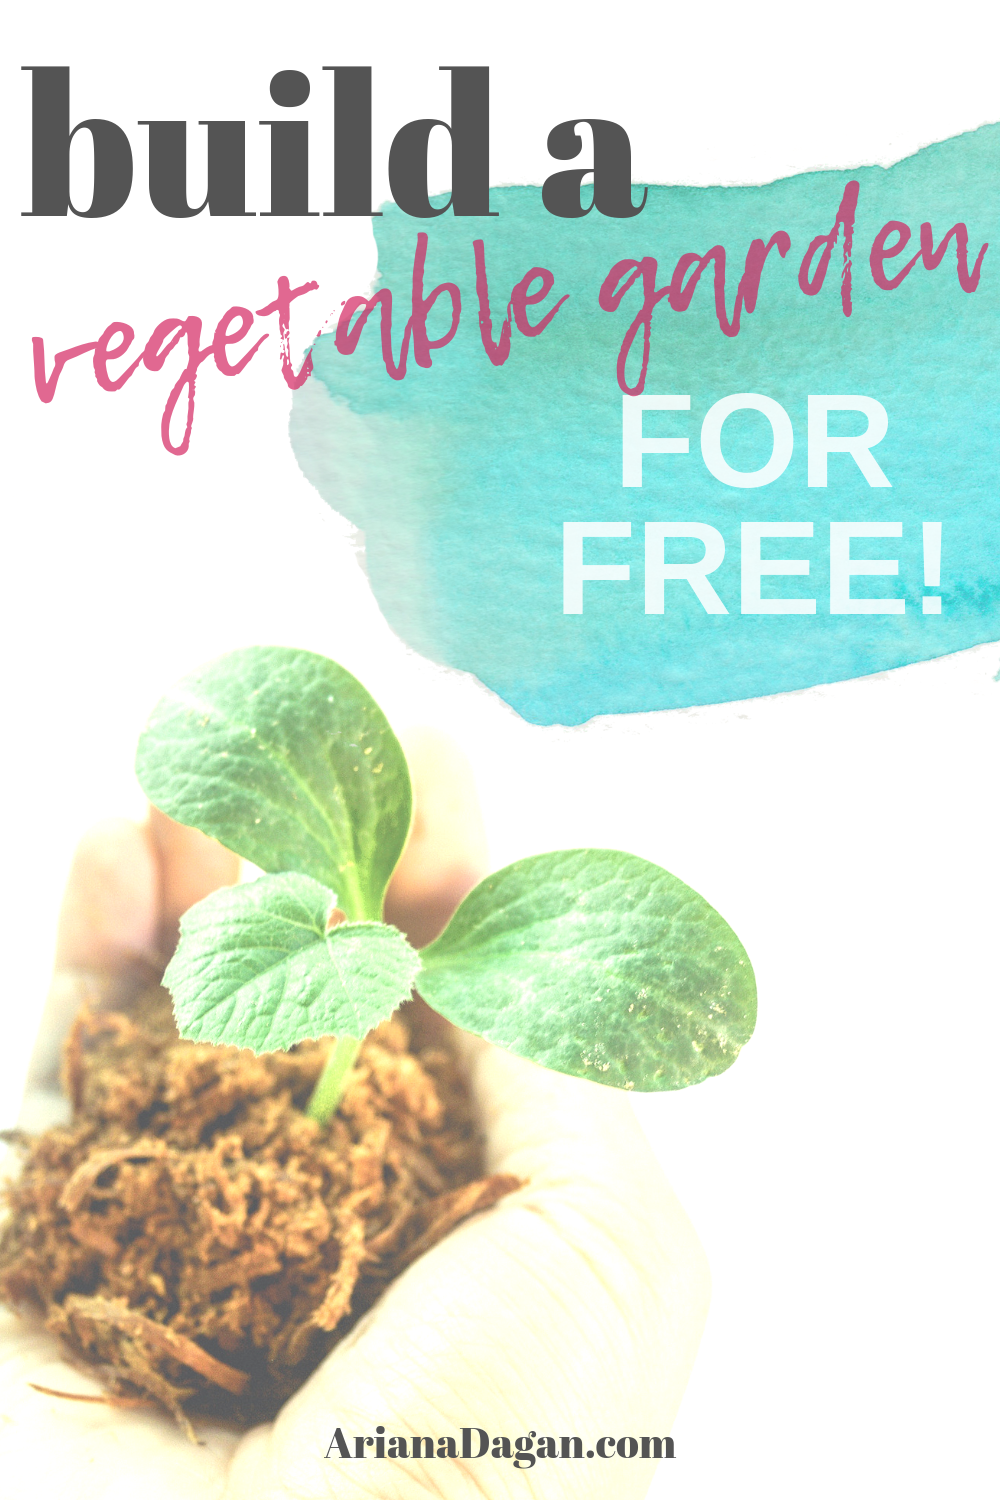 Build a Vegetable Garden for Free by Ariana Dagan